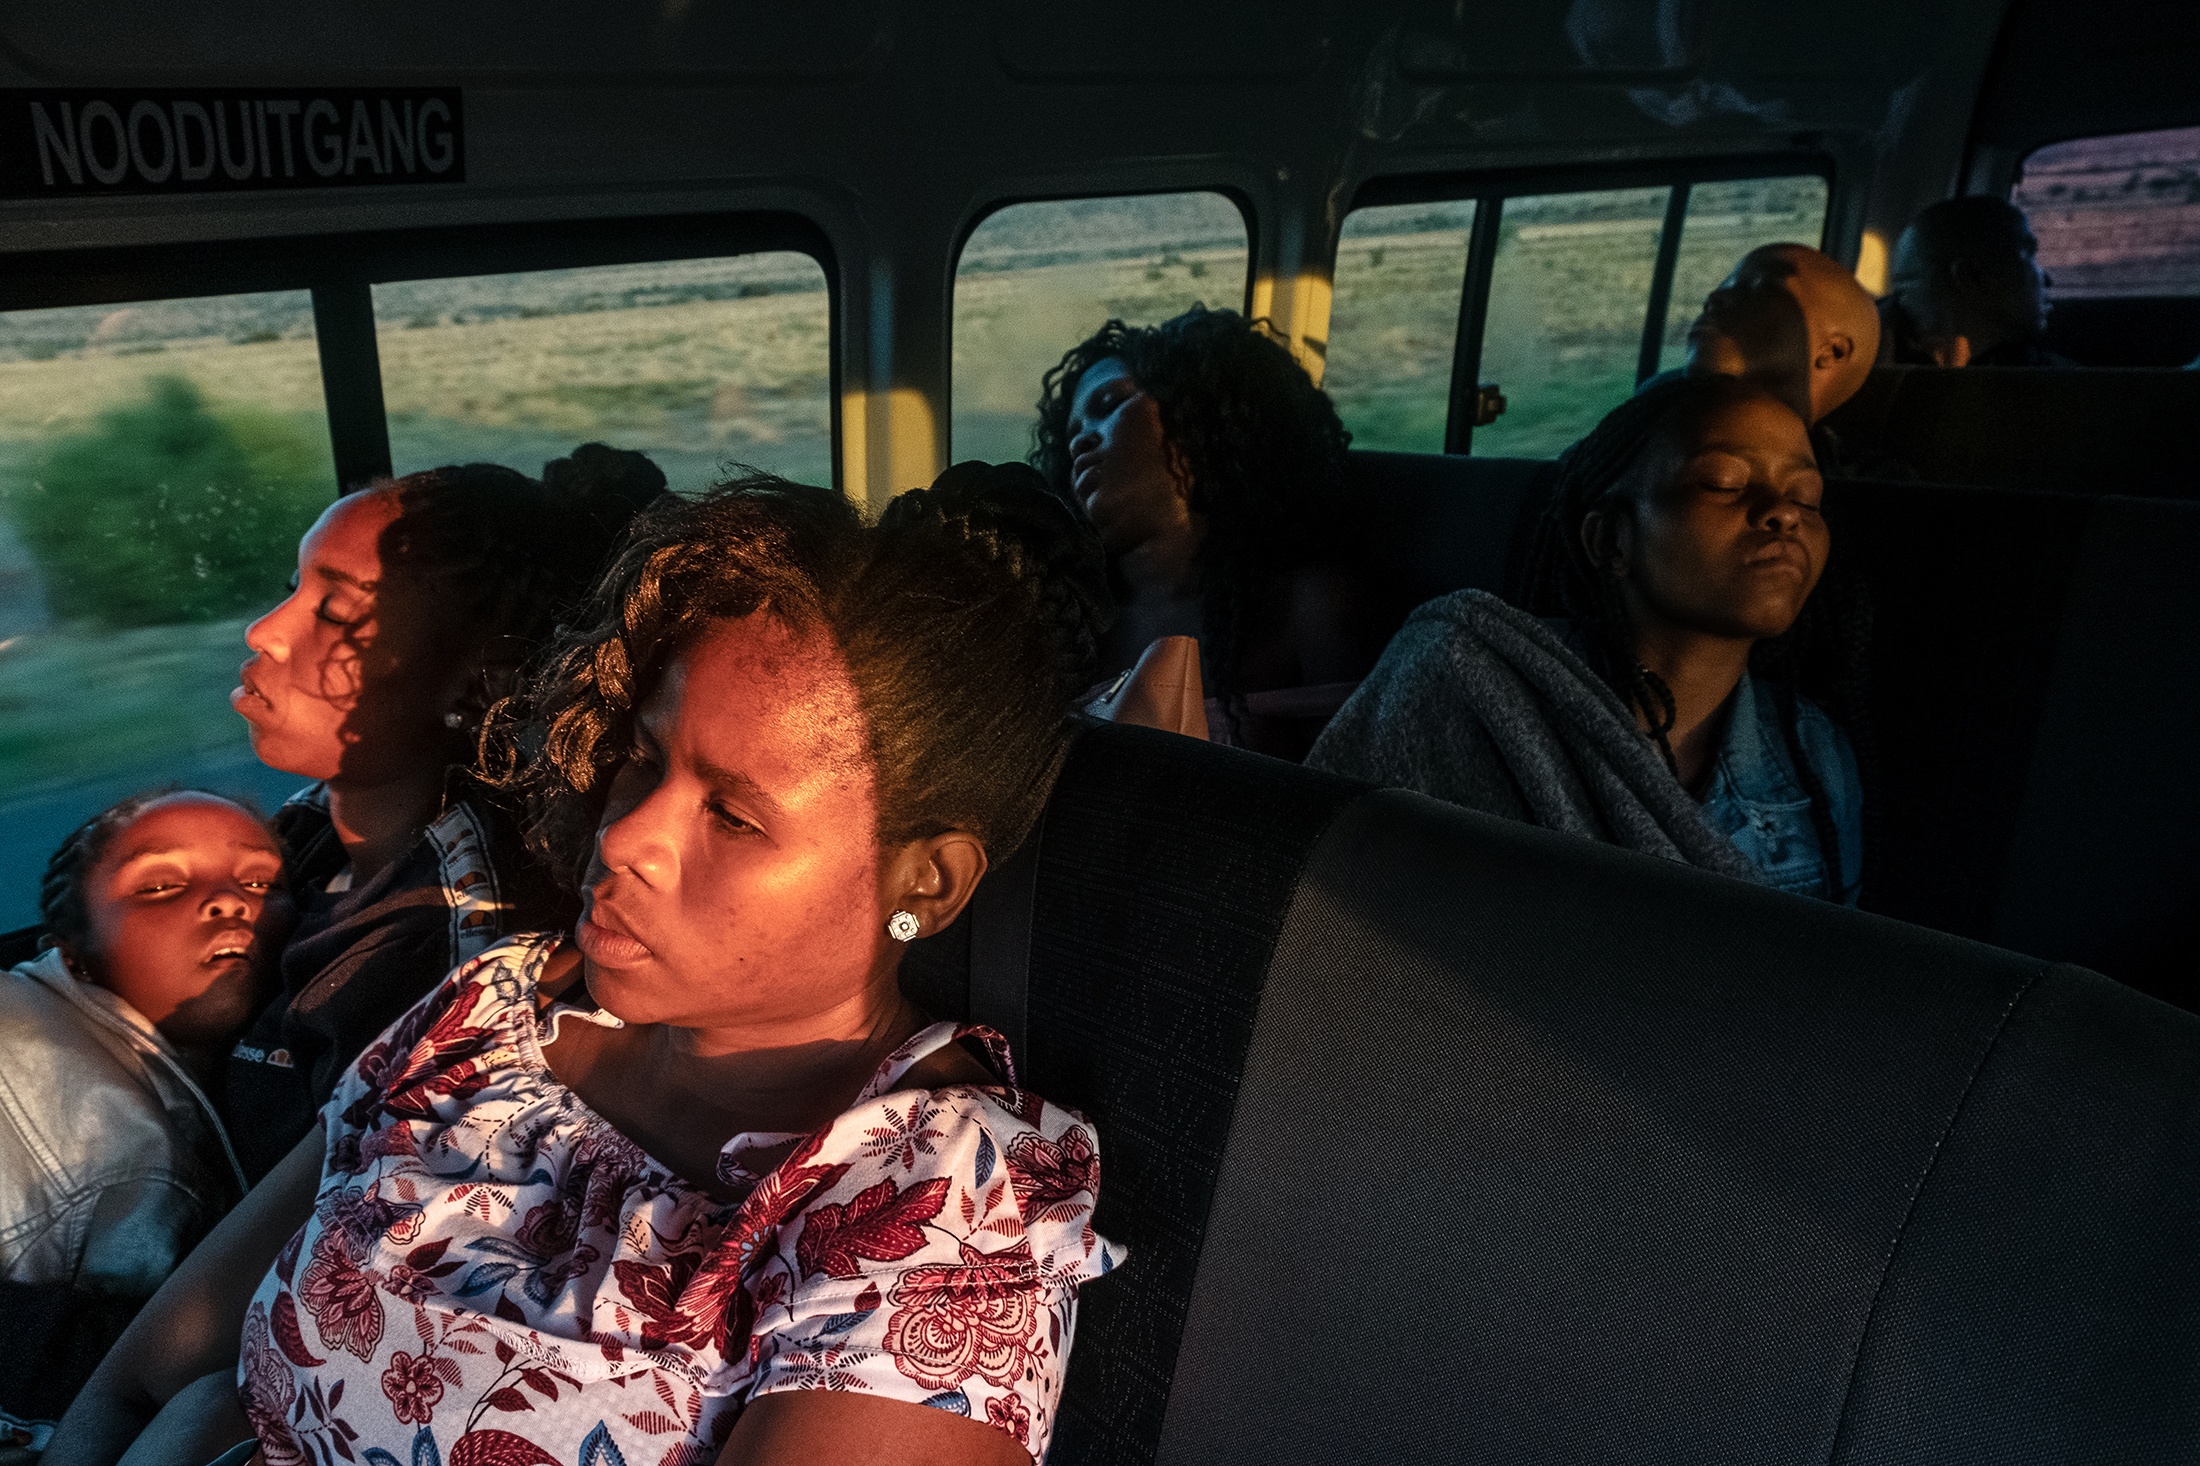 Lindokuhle Sobekwa's photograph 'Ziyaphuma ezicweleyo' shows individuals seated in a bus, several of them seemingly asleep.
